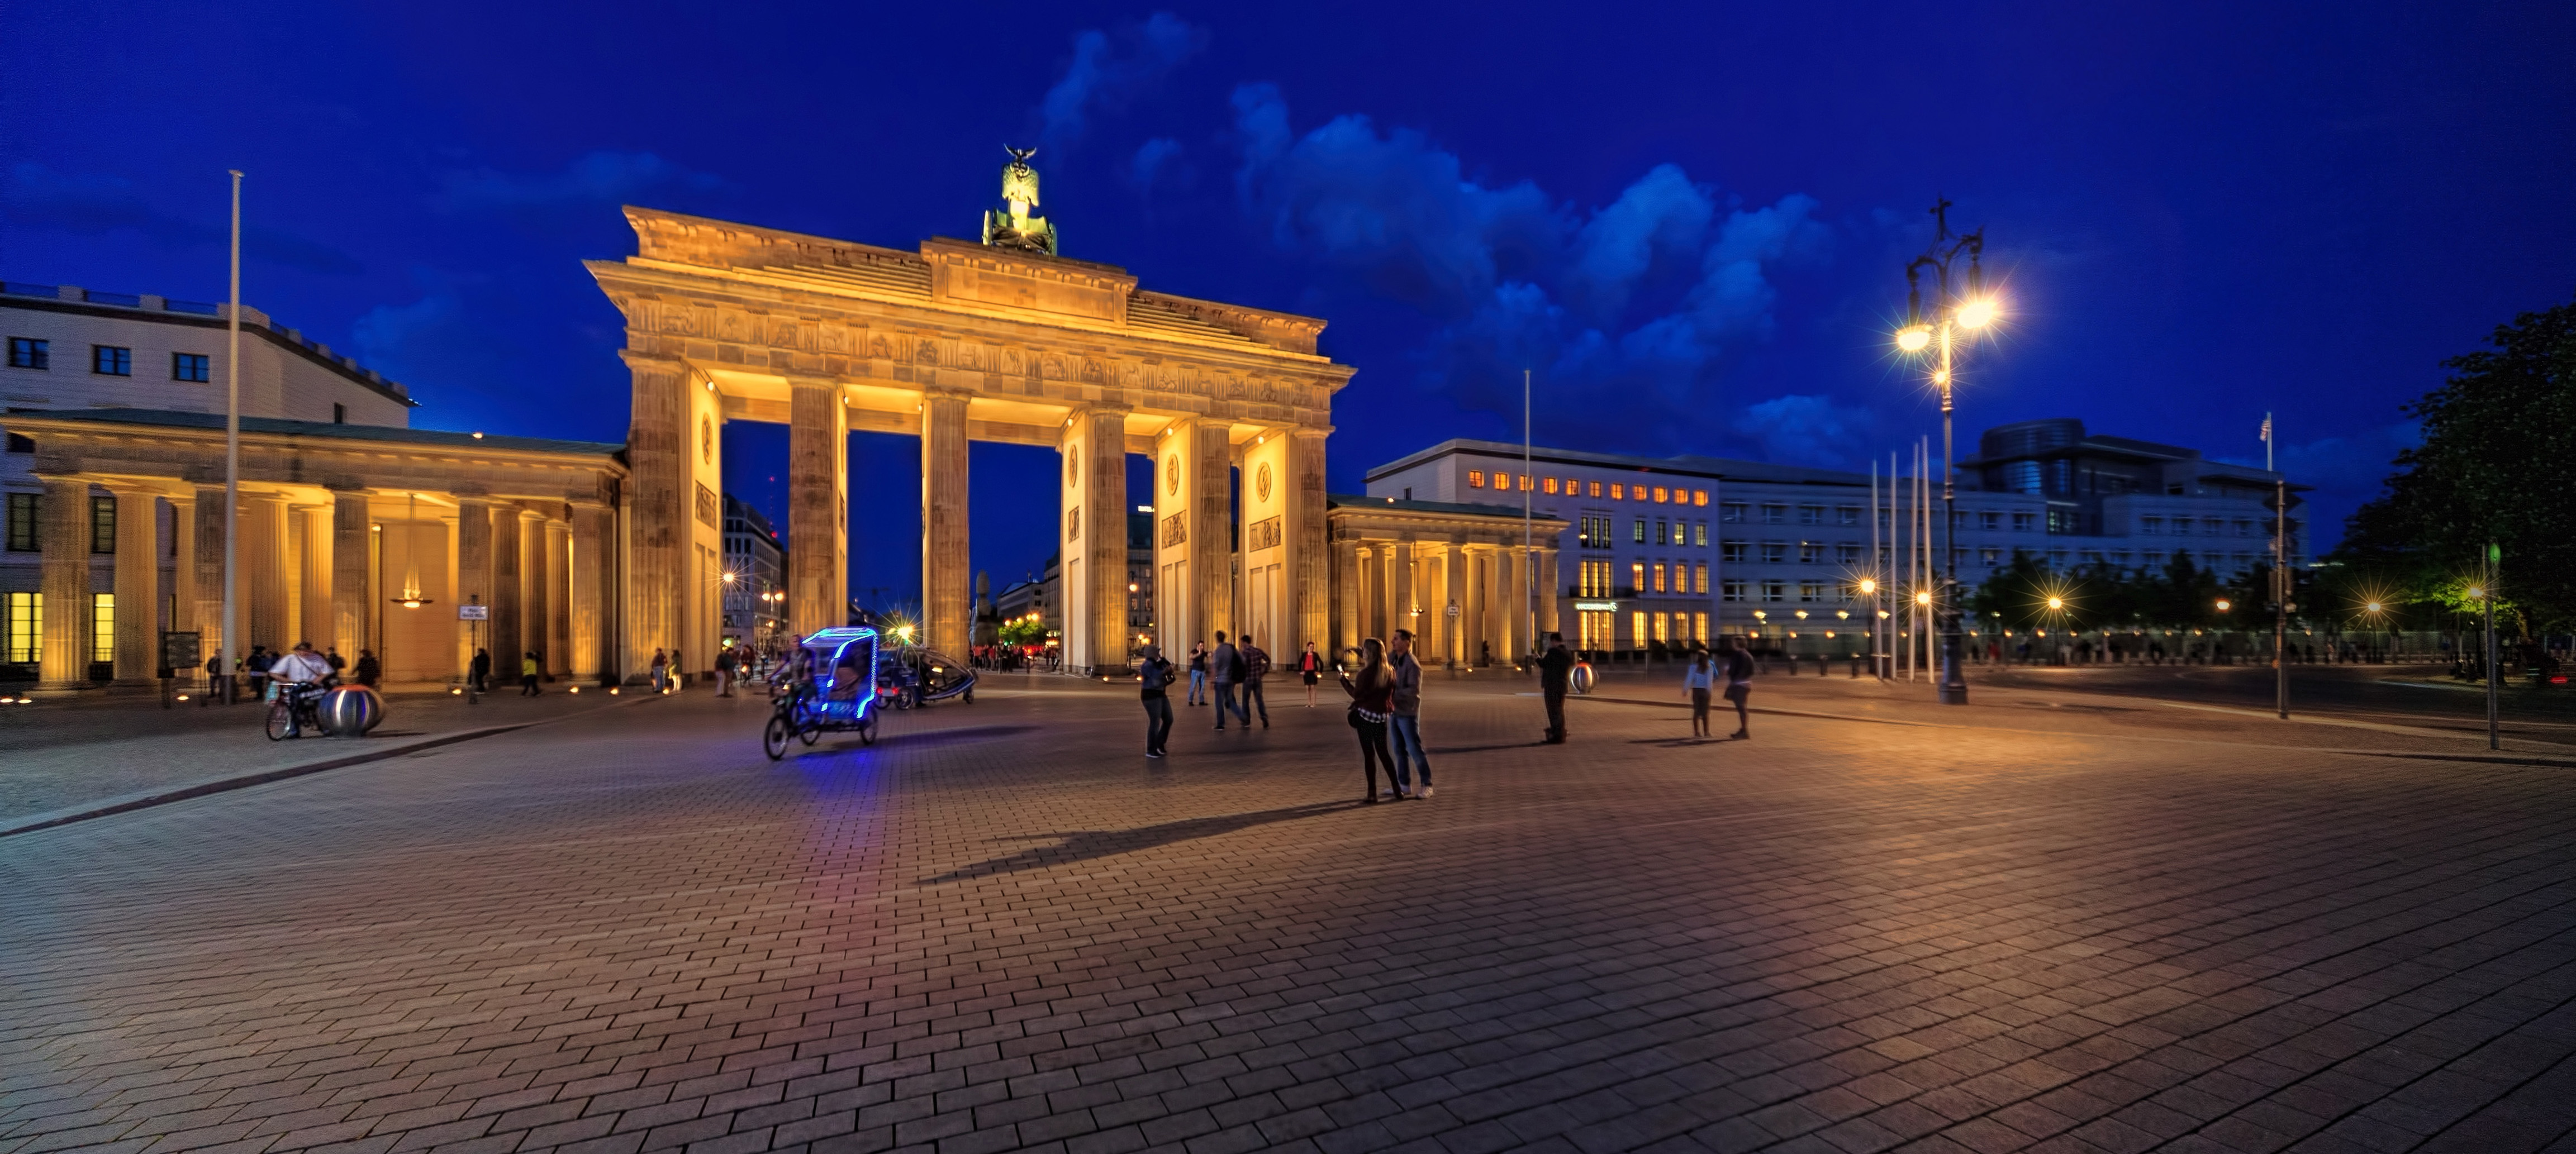 Berlin during lockdown- an insider guide